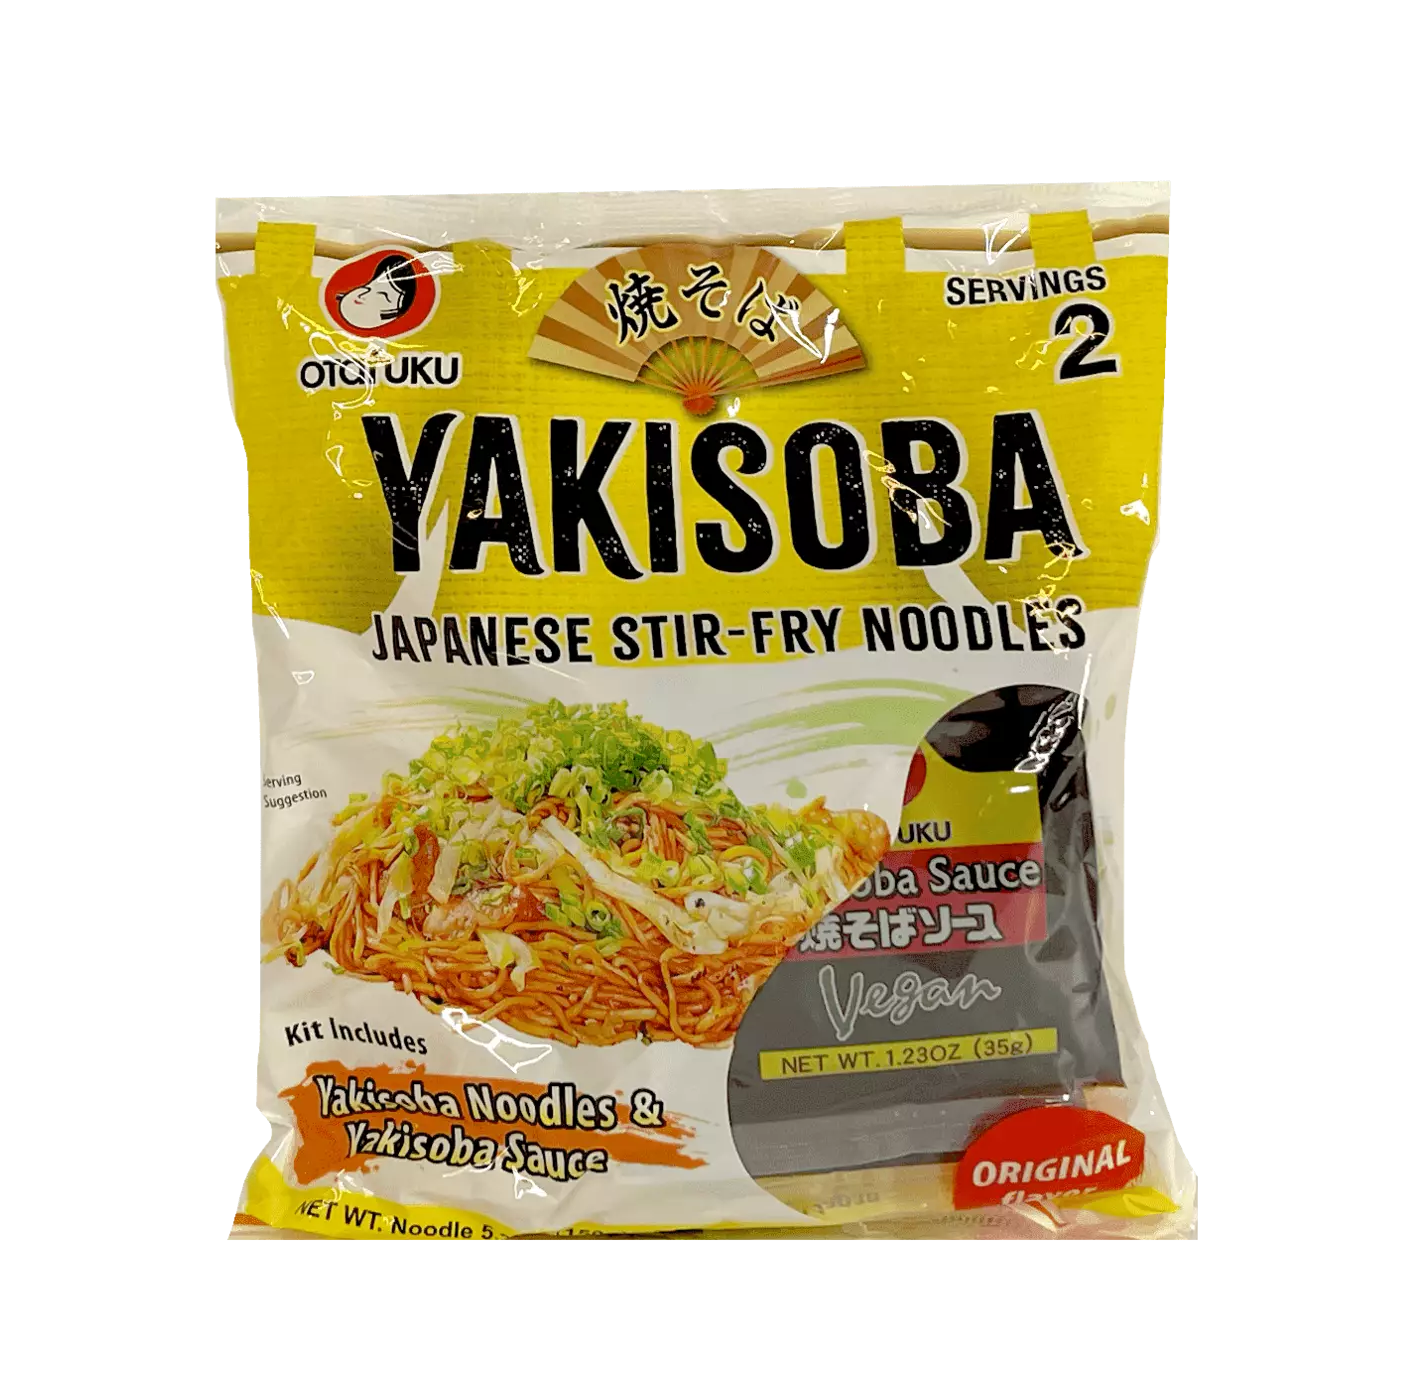 Yakisoba Noodles & Sauce for 2person 370g Otafuku Japan